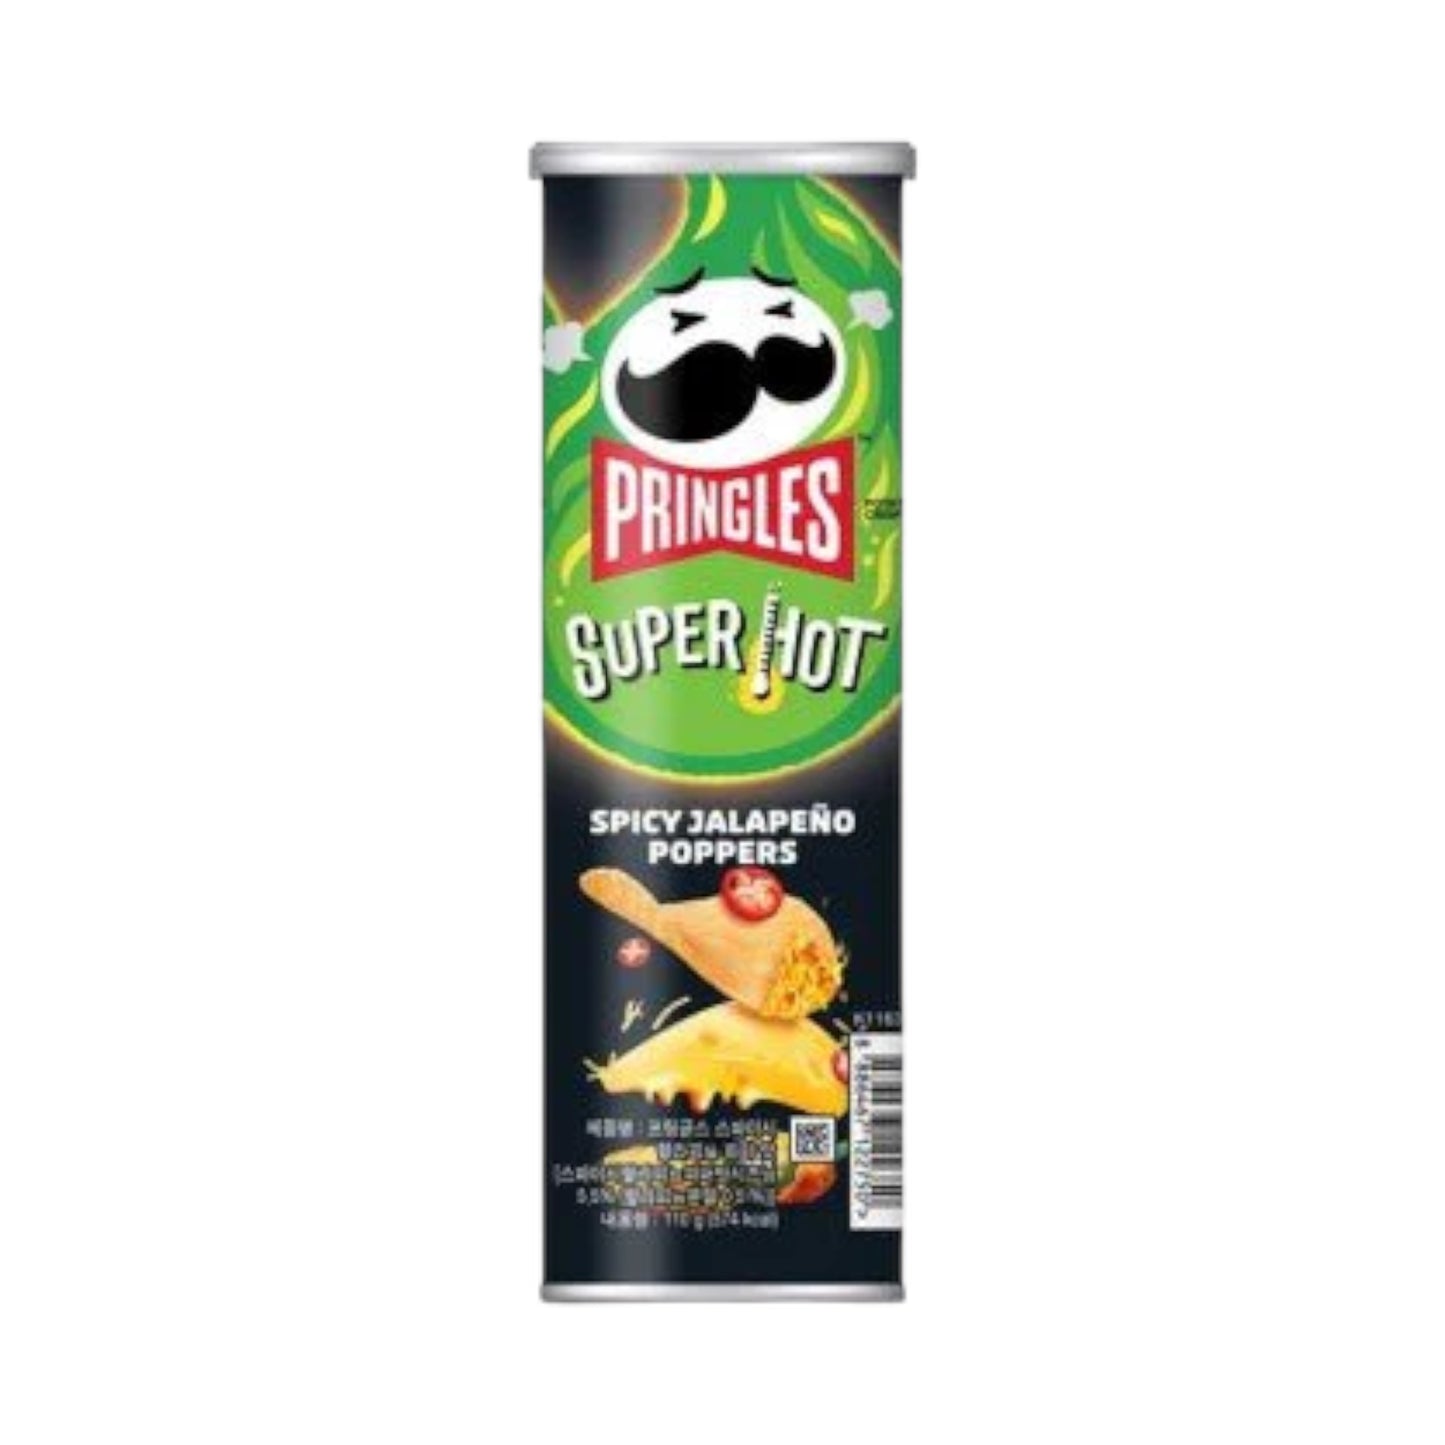 Pringles Spicy Jalapeno Poppers (Korea) - 110g